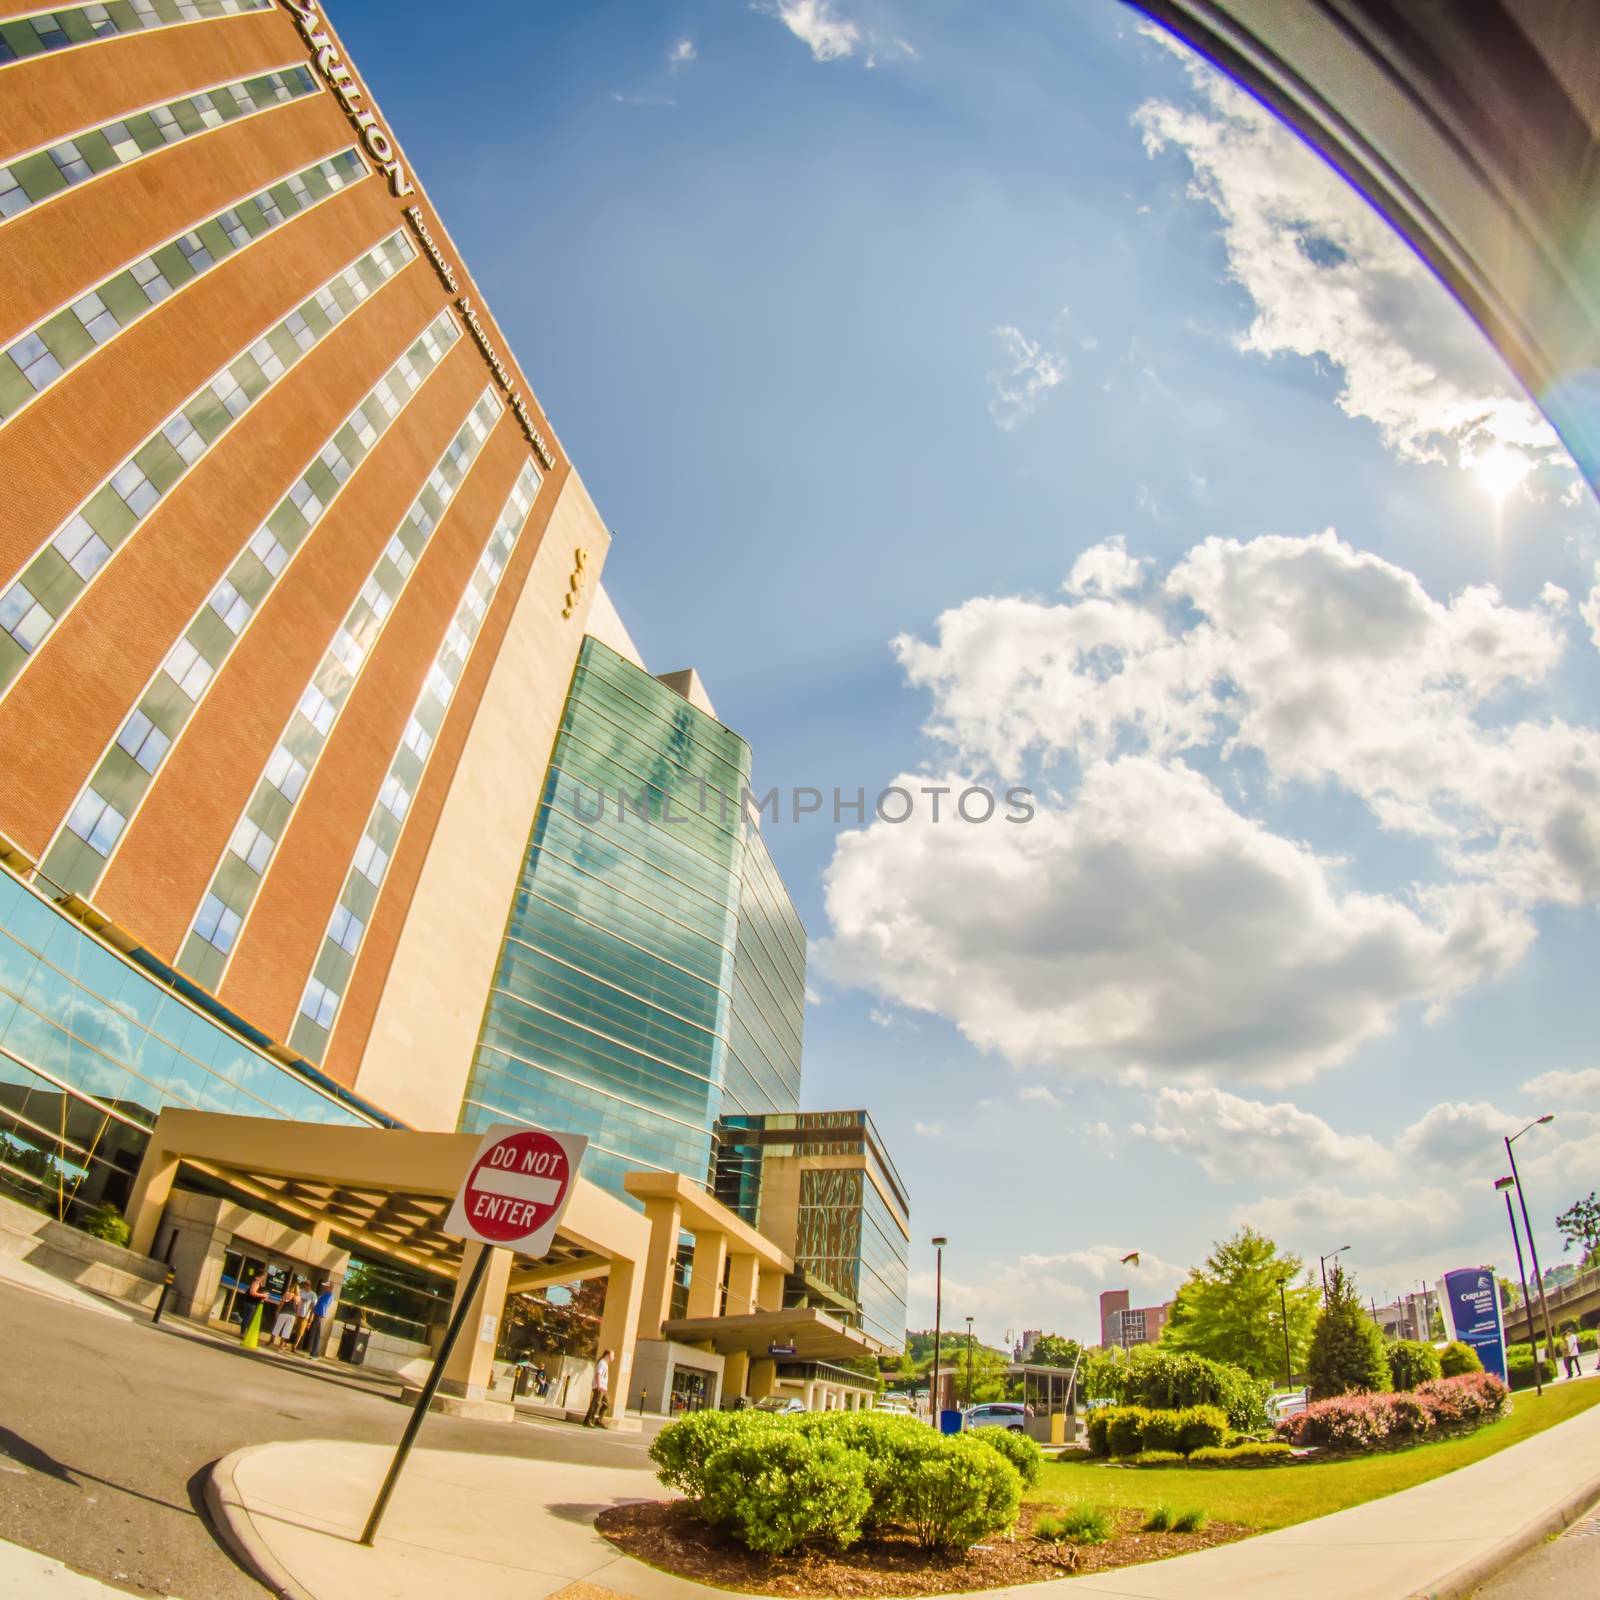 Carilion Roanoke Memorial Hospital by digidreamgrafix